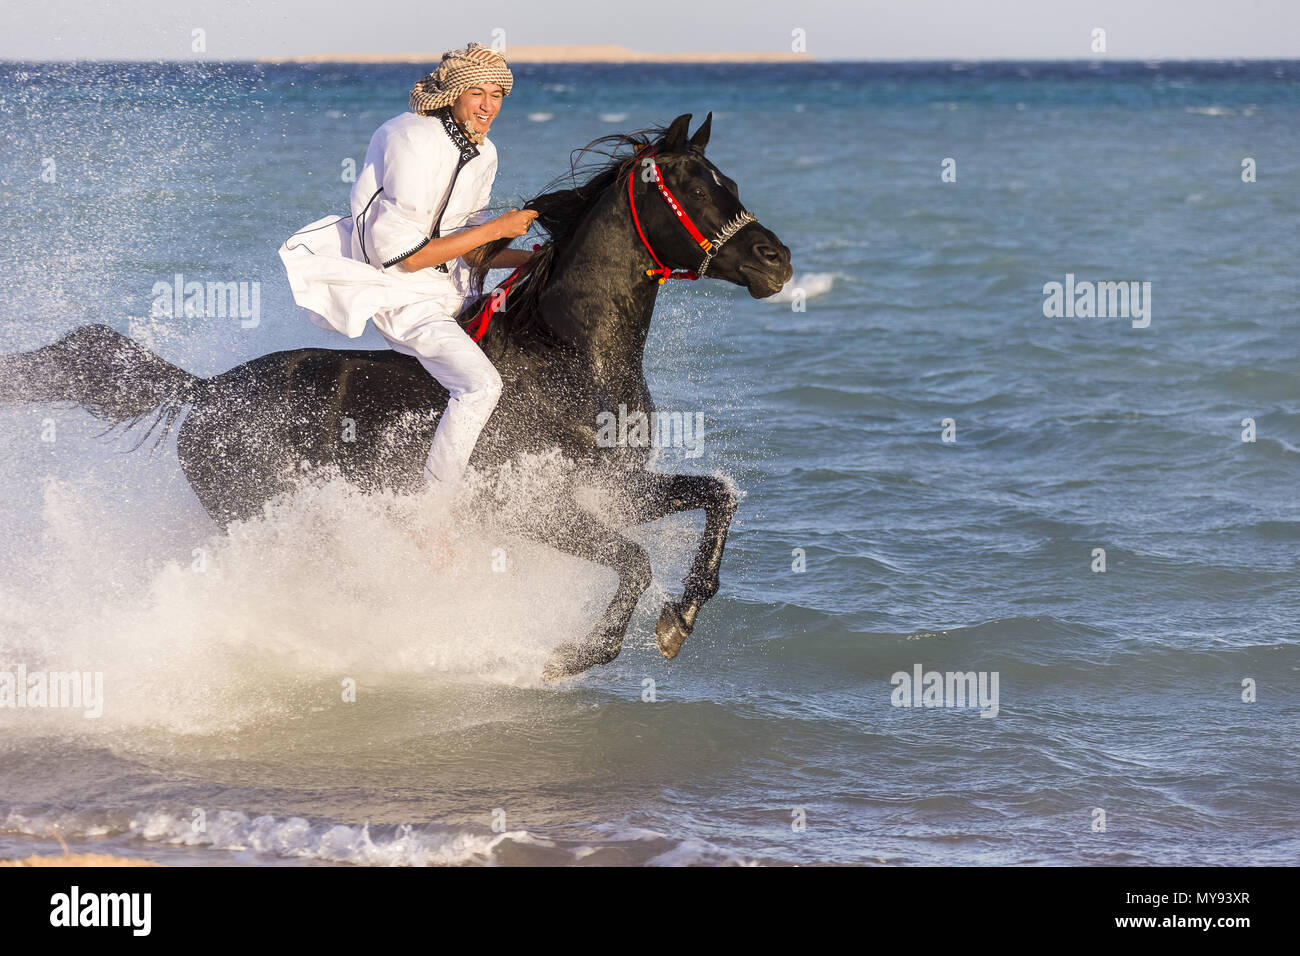 Arabian Horse. Rider on black stallion galloping in shallow water. Egypt Stock Photo